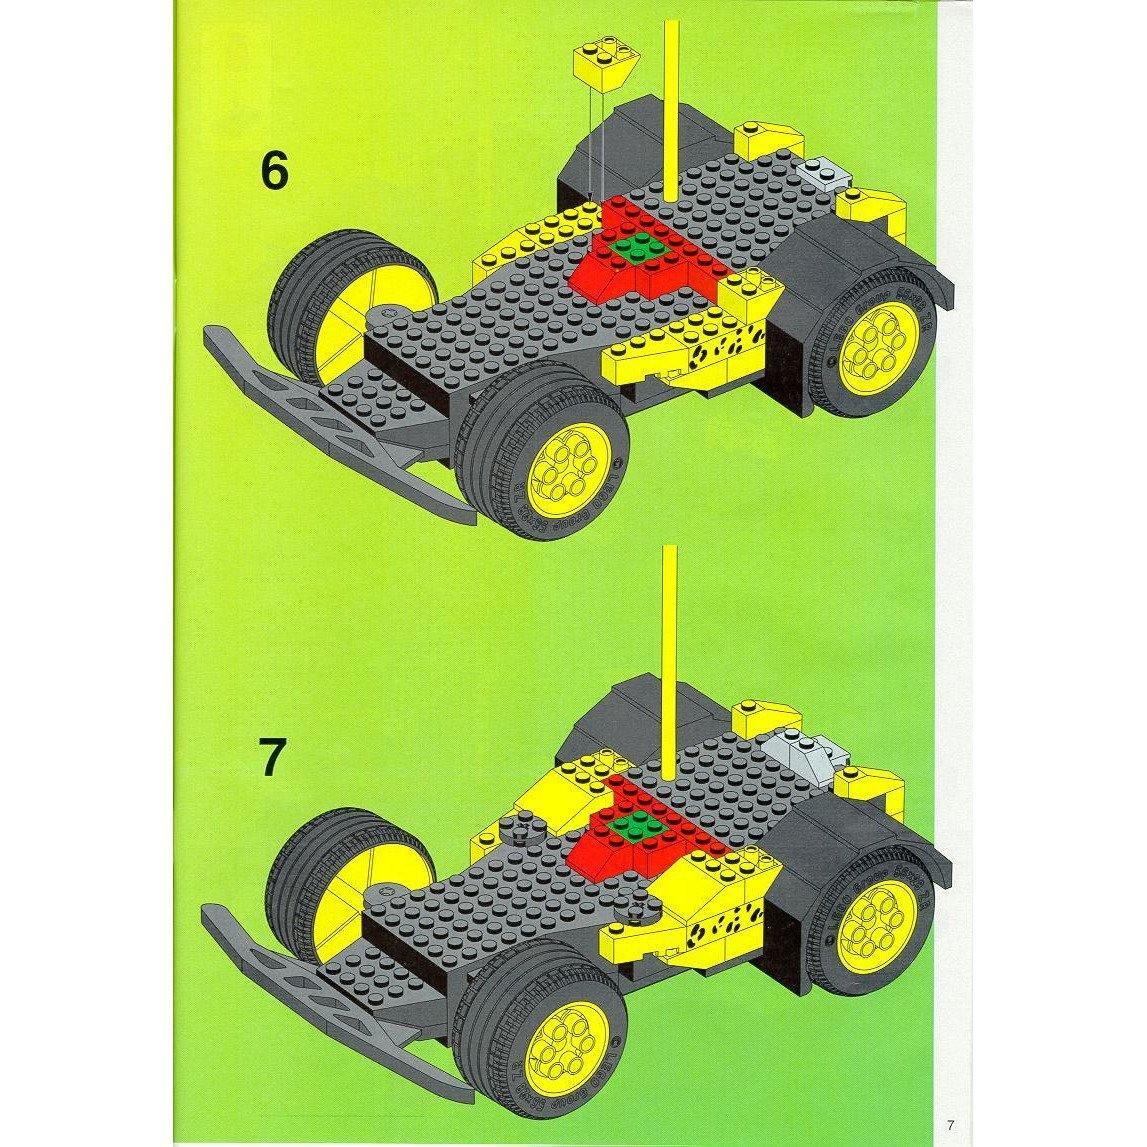 LEGO Vintage Radio Remote Control Racer 5600 - BumbleToys - 5-7 Years, Boys, LEGO, System